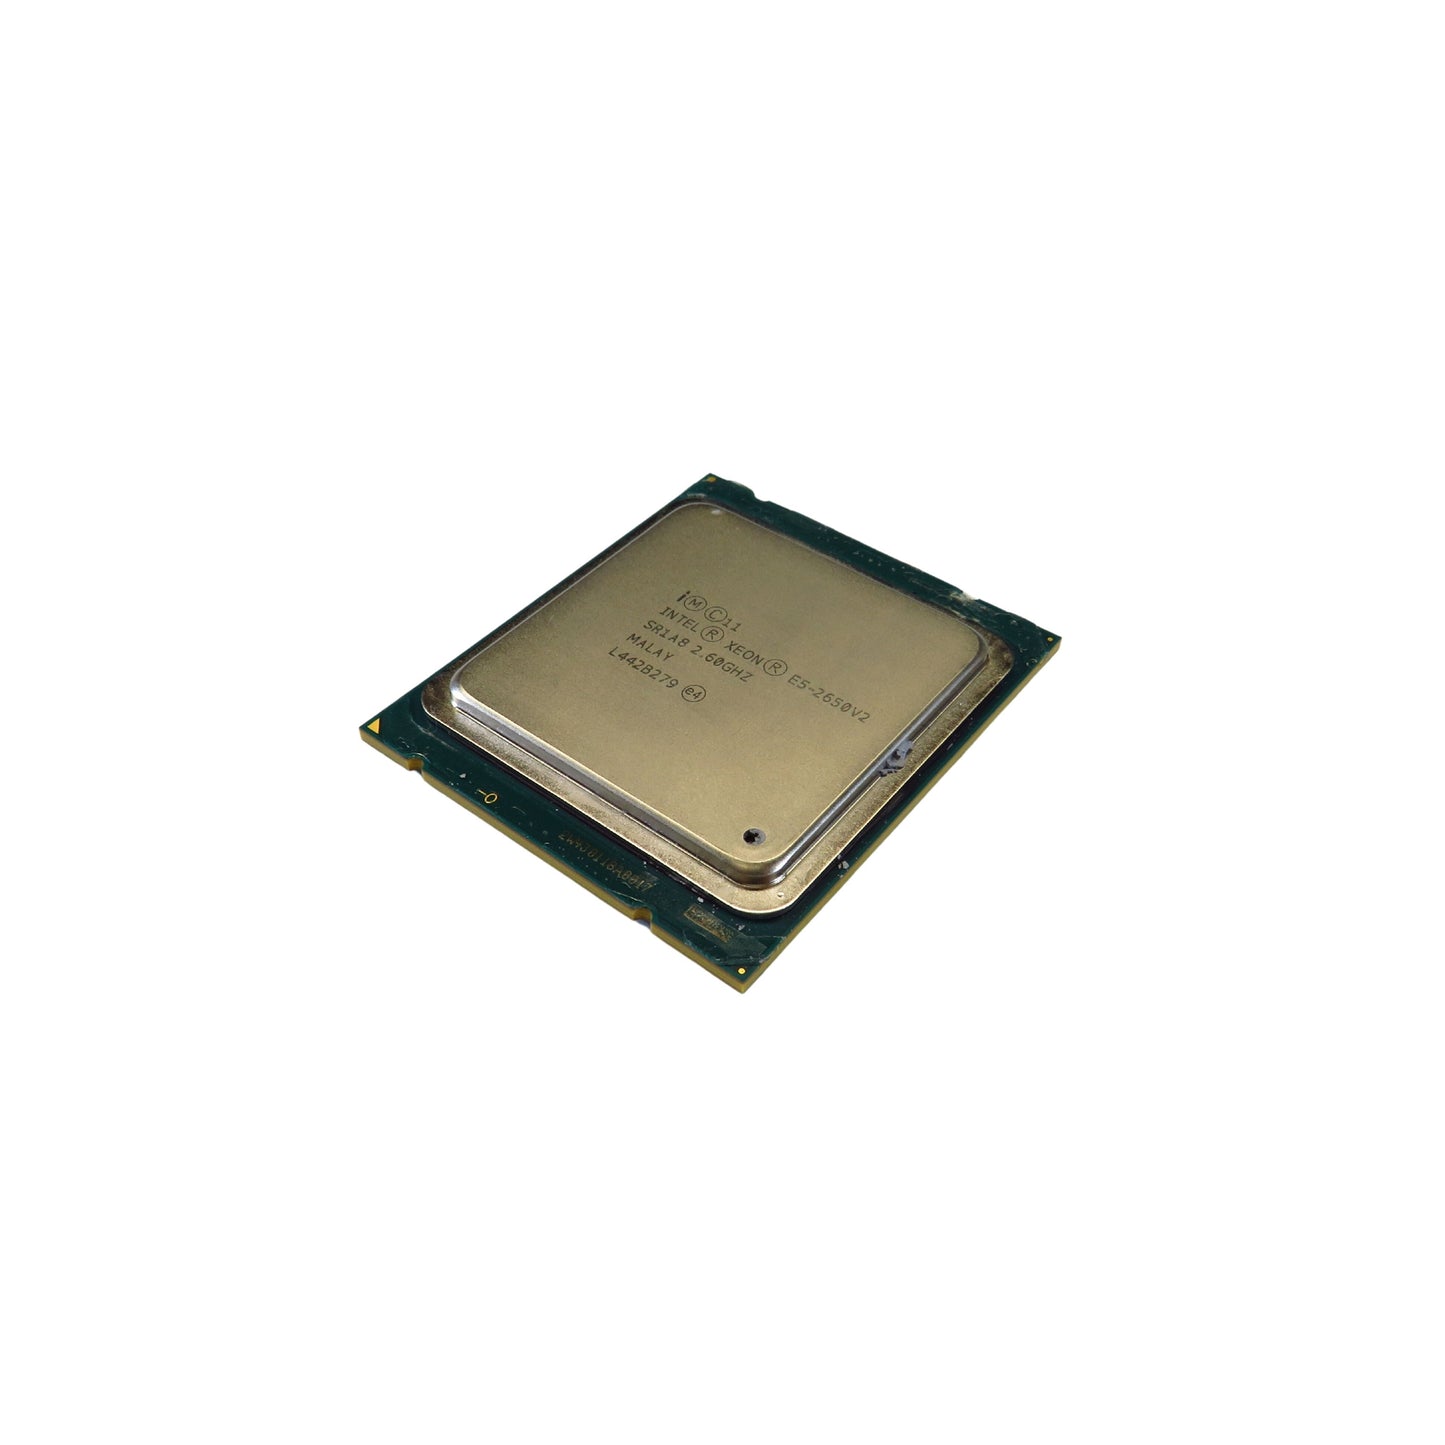 Intel SR1A8 Xeon E5-2650V2 2.6GHz 8 Core LGA2011 Server CPU Processor (Refurbished)